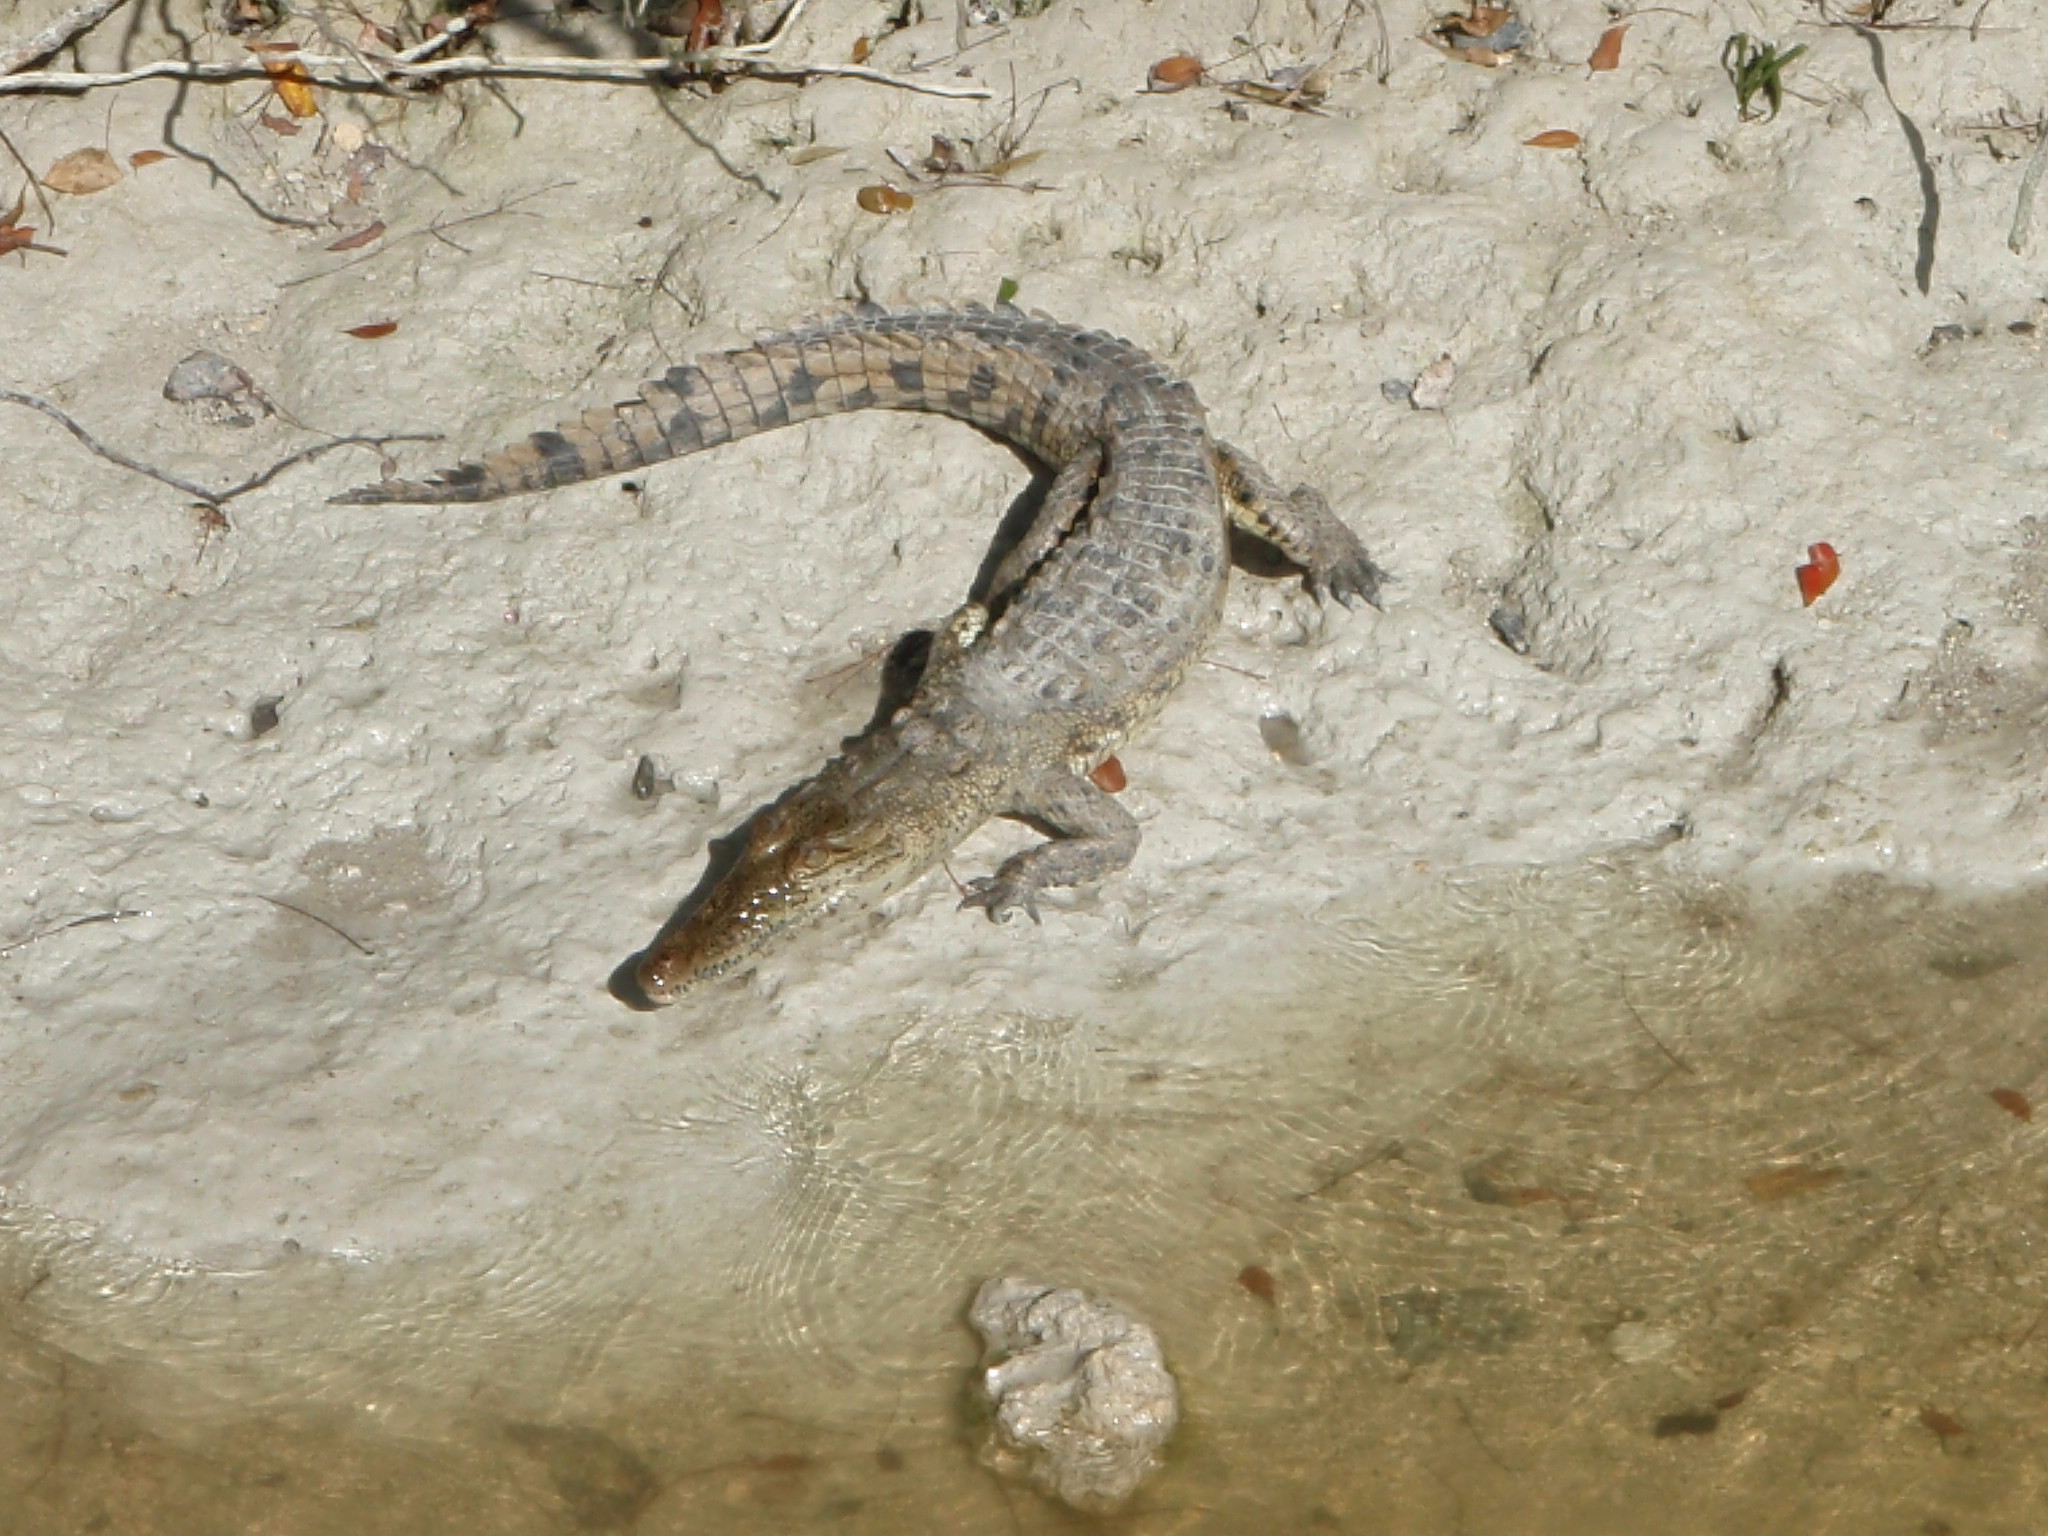 Juvenile crocodile at Buttonwood Canal